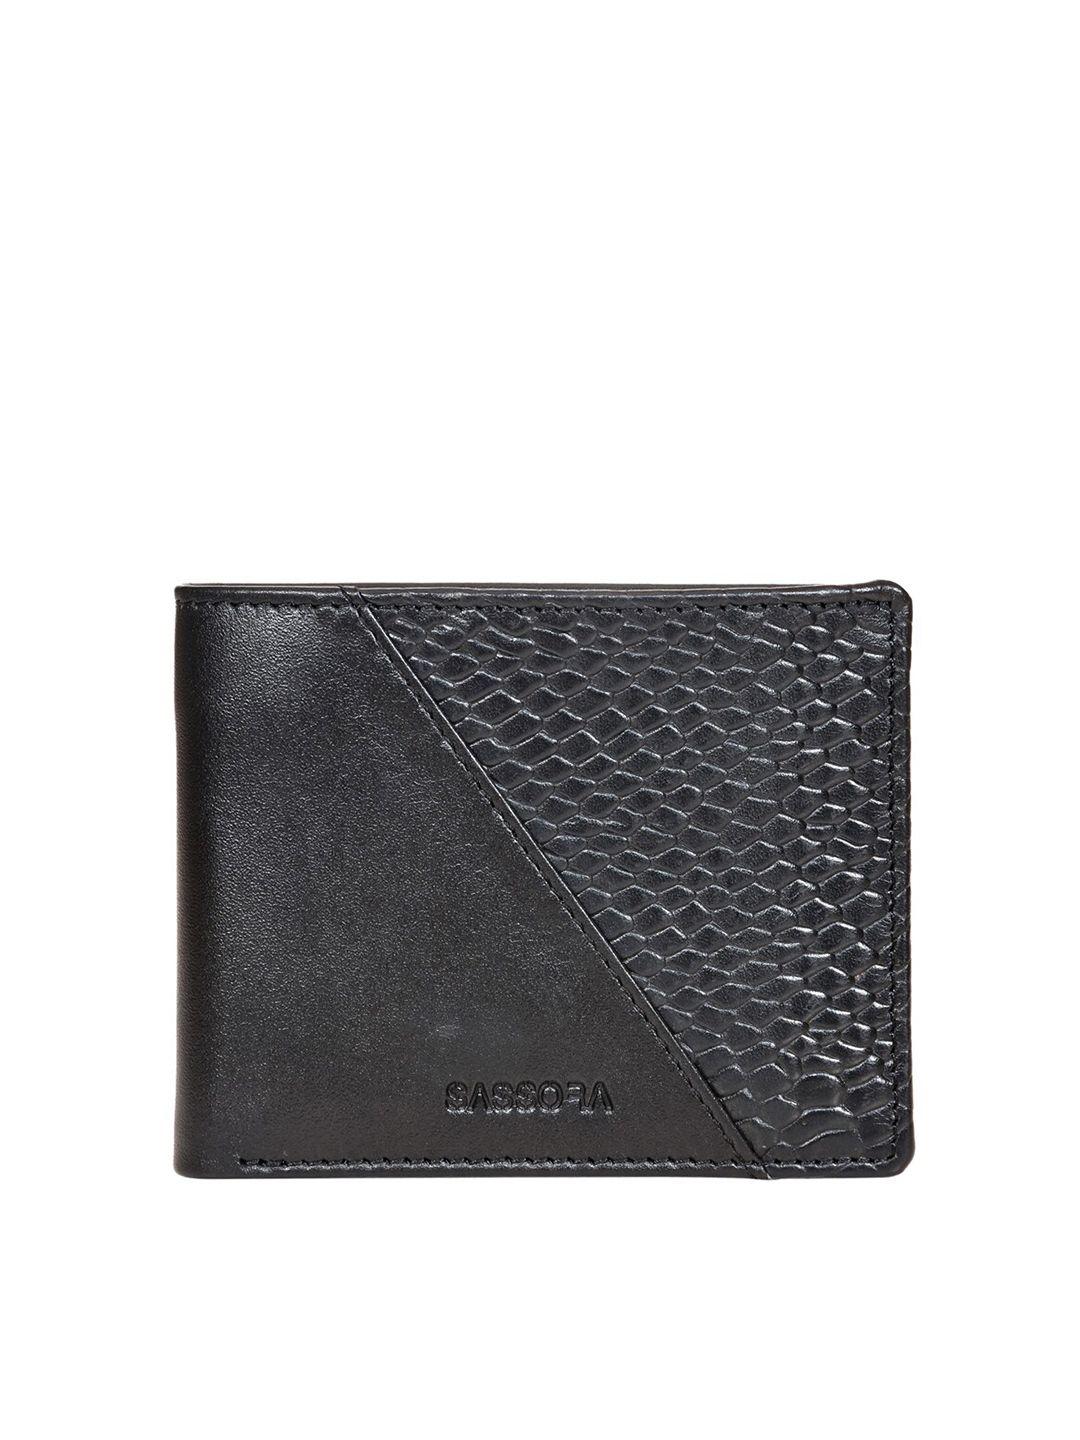 sassora men black textured leather two fold wallet